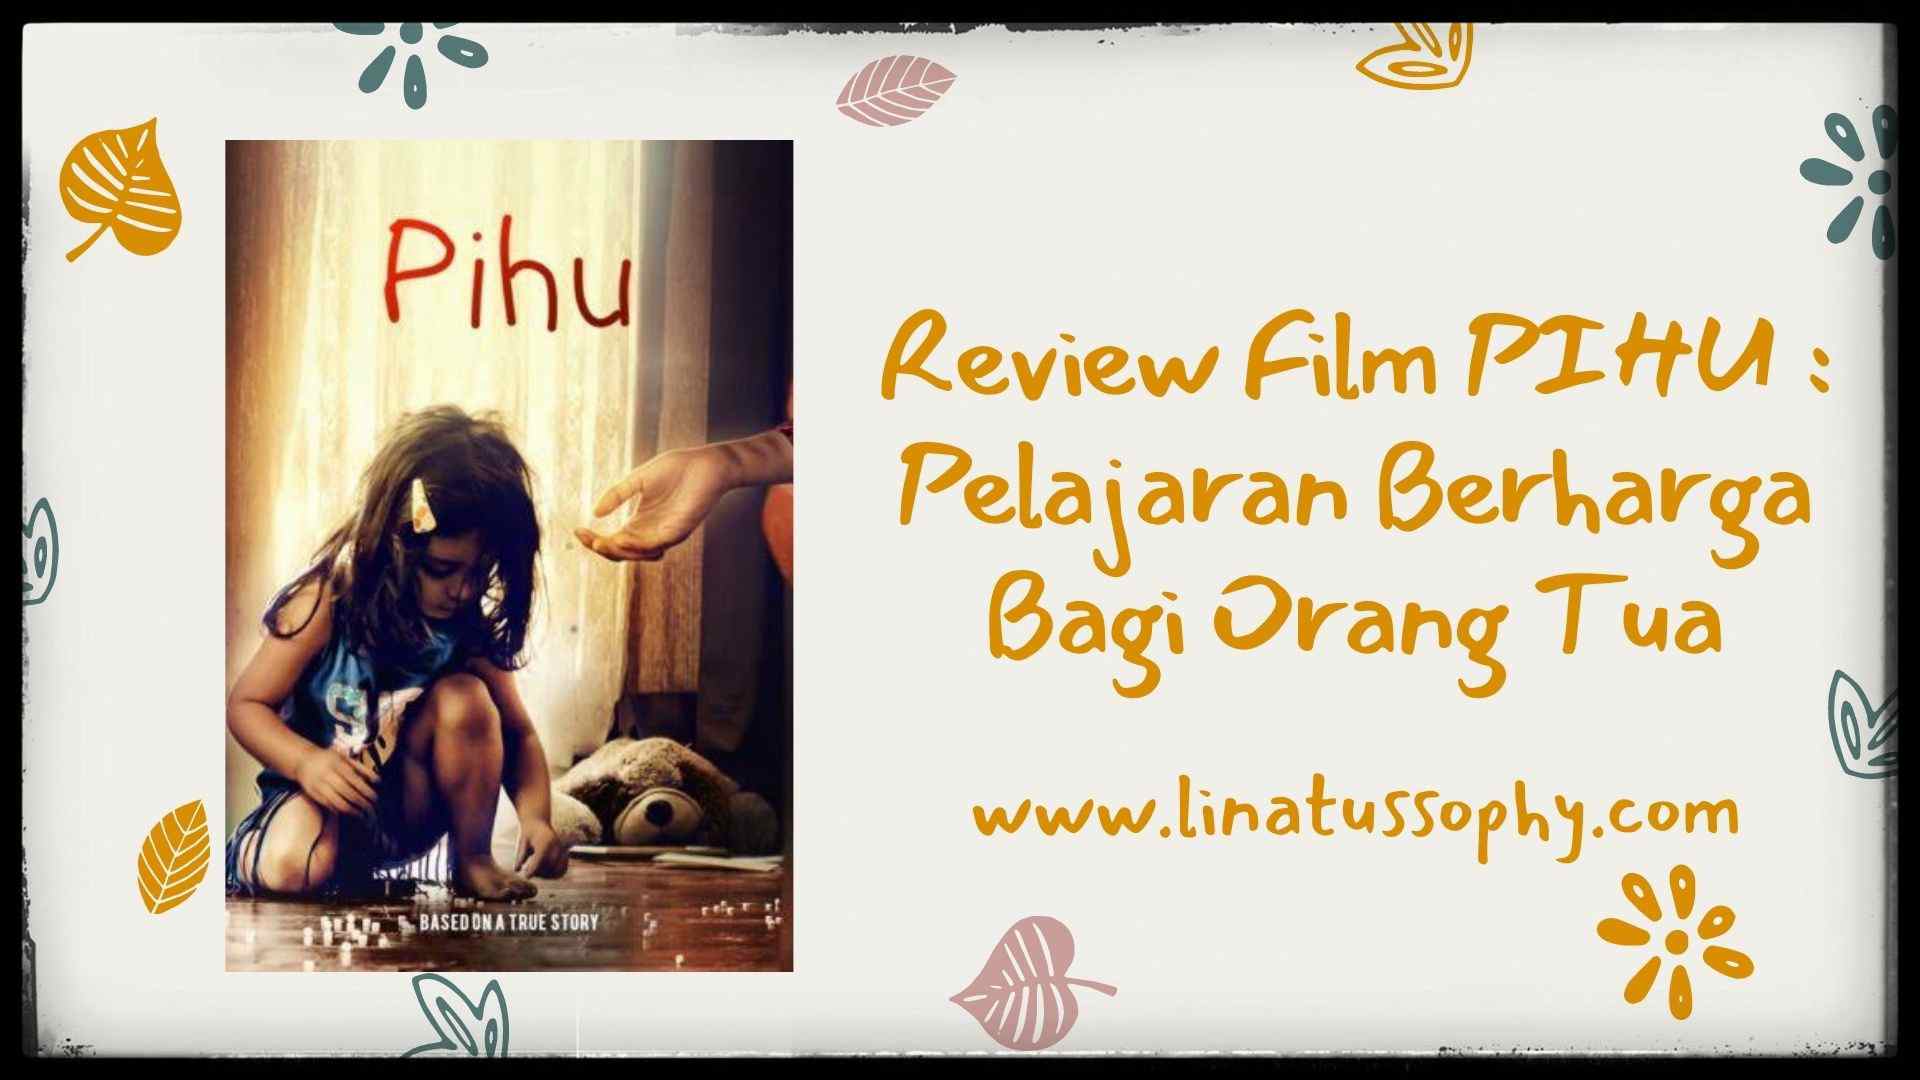 Review film Pihu